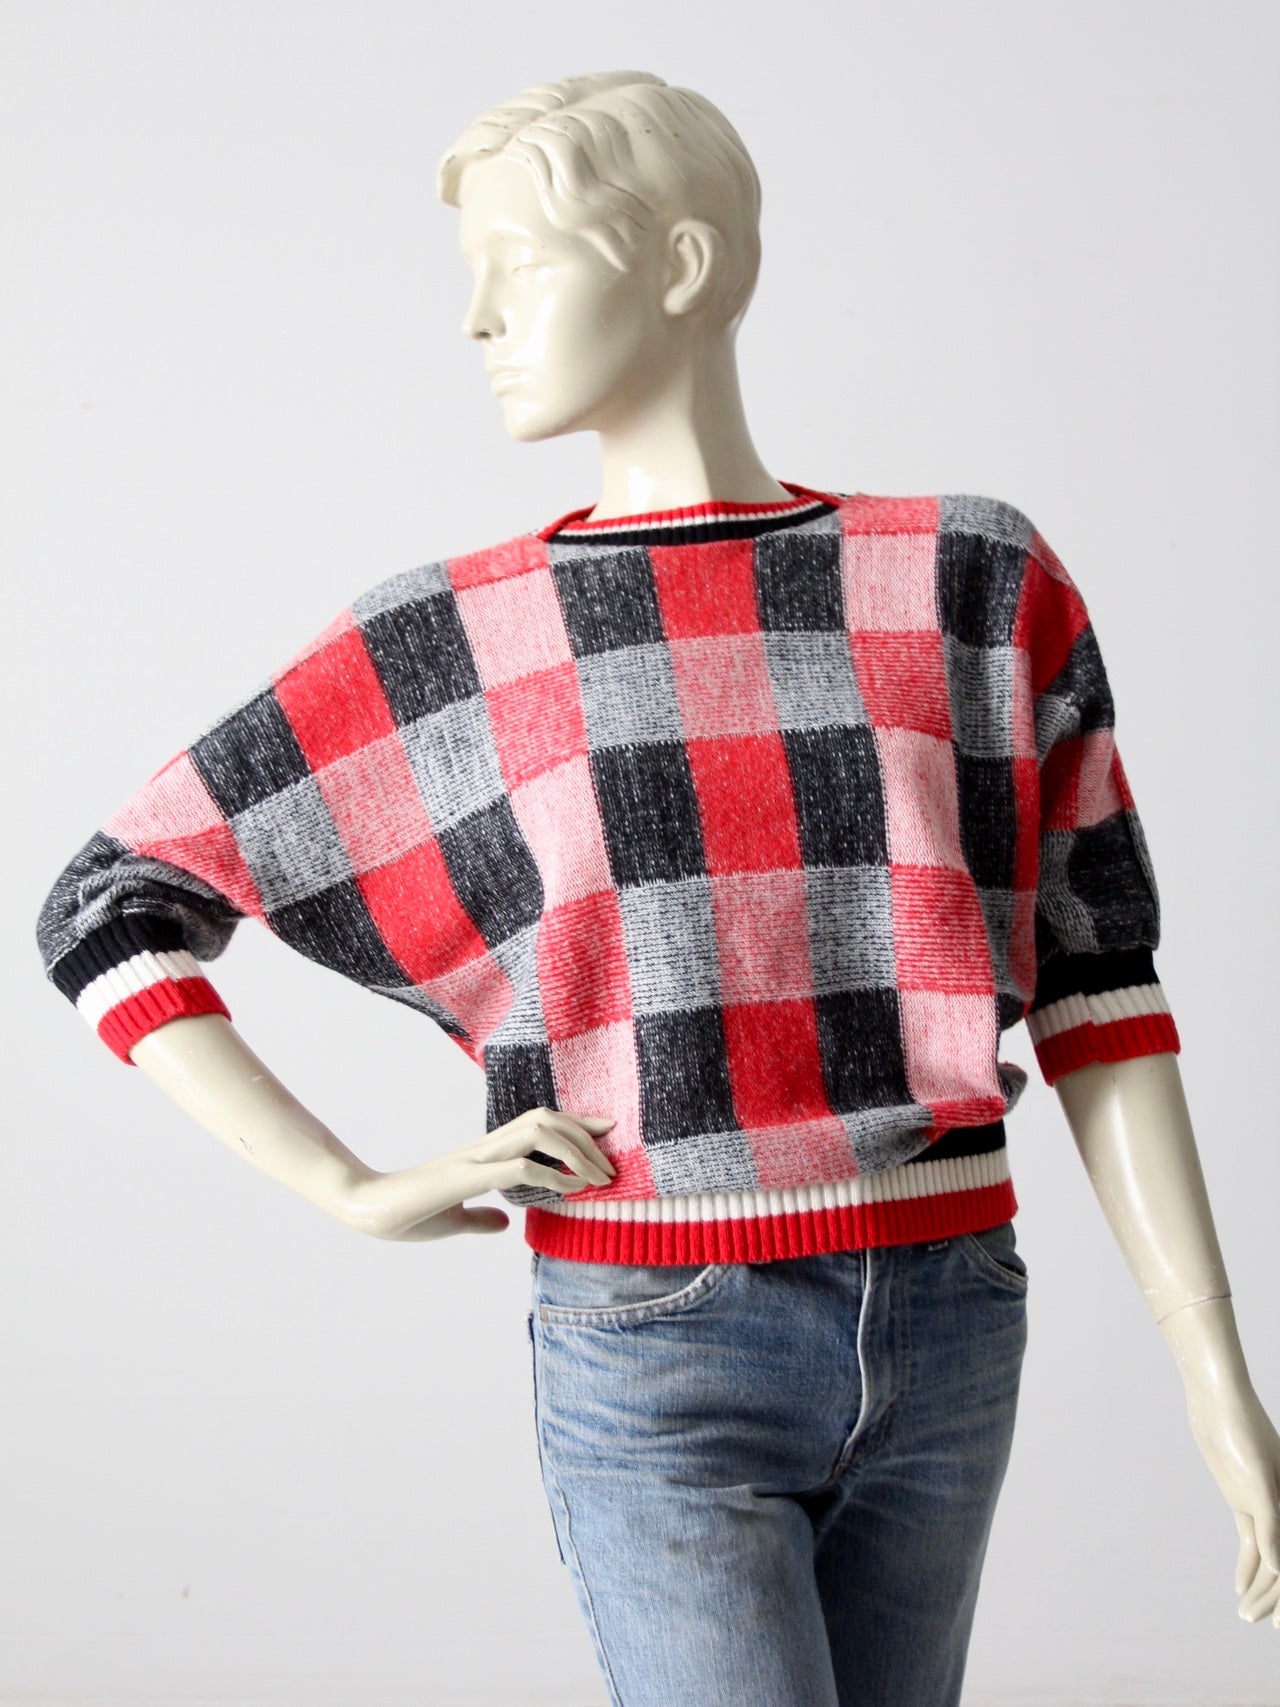 vintage EB Allen knit pullover